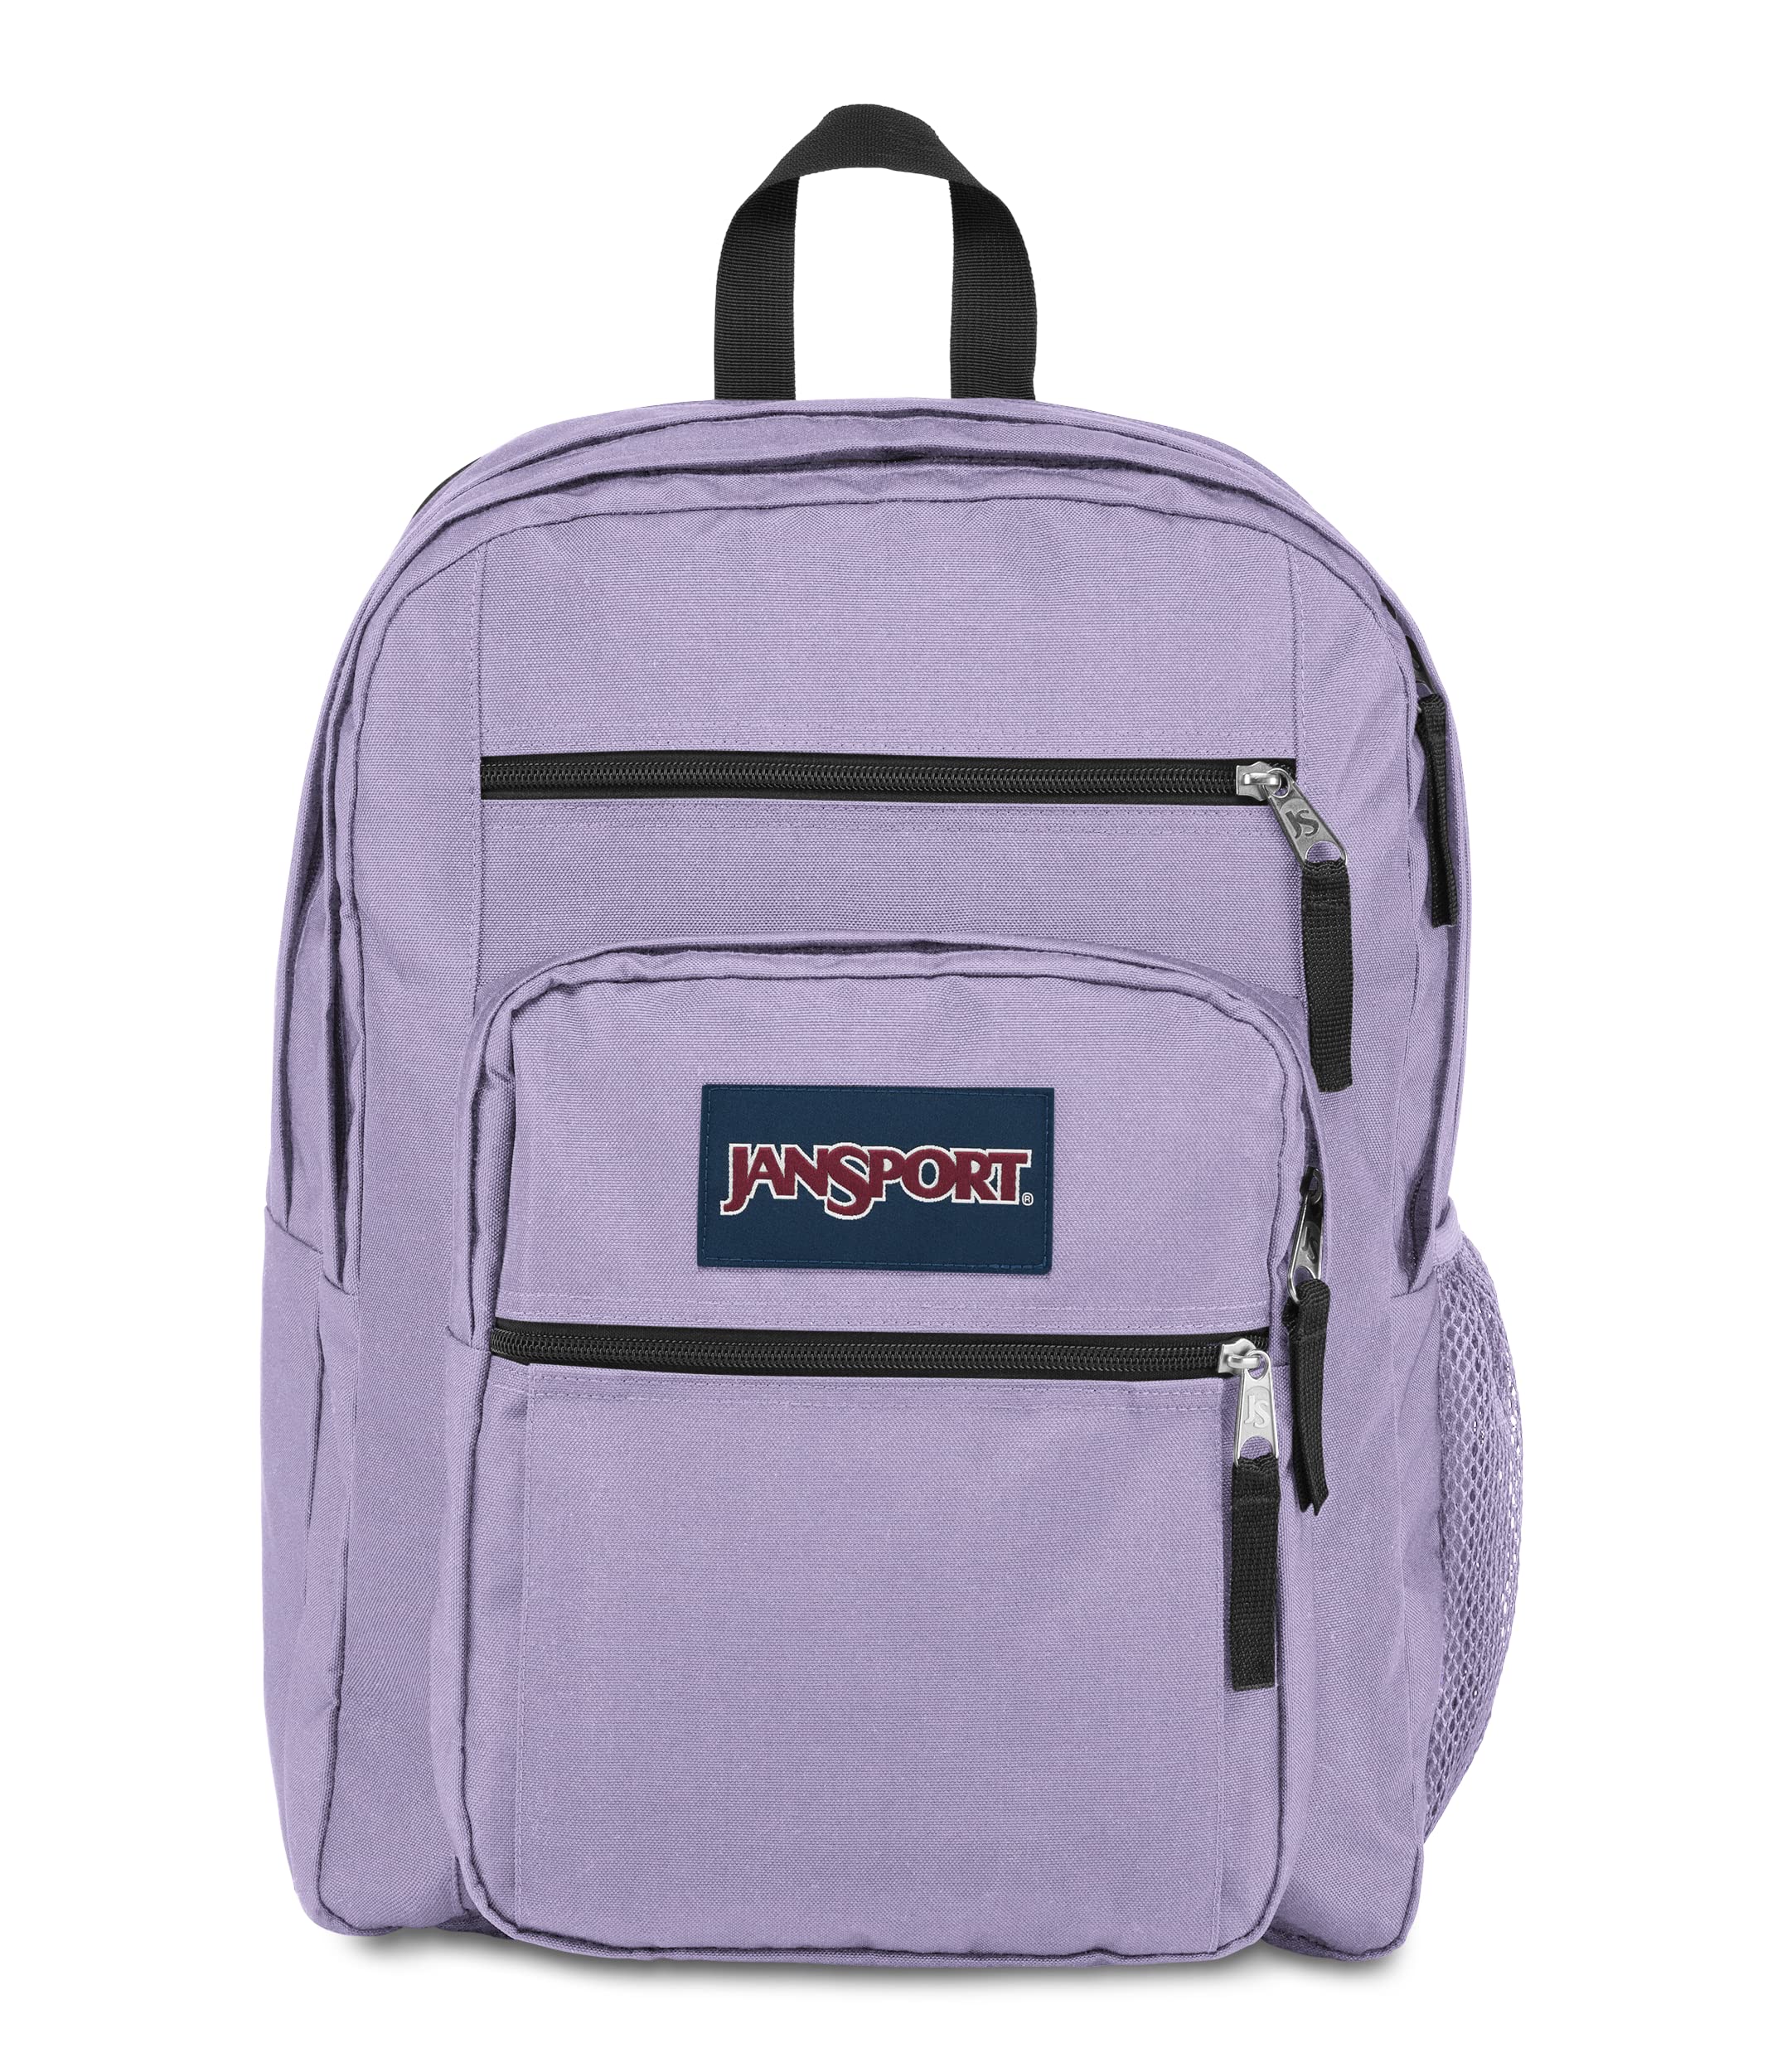 JanSport Big Laptop Backpack for College - High-Quality Computer Bag with 2 Compartments, Ergonomic Shoulder Straps, 15” Laptop Sleeve, Haul Handle - Book Rucksack, Pastel Lilac